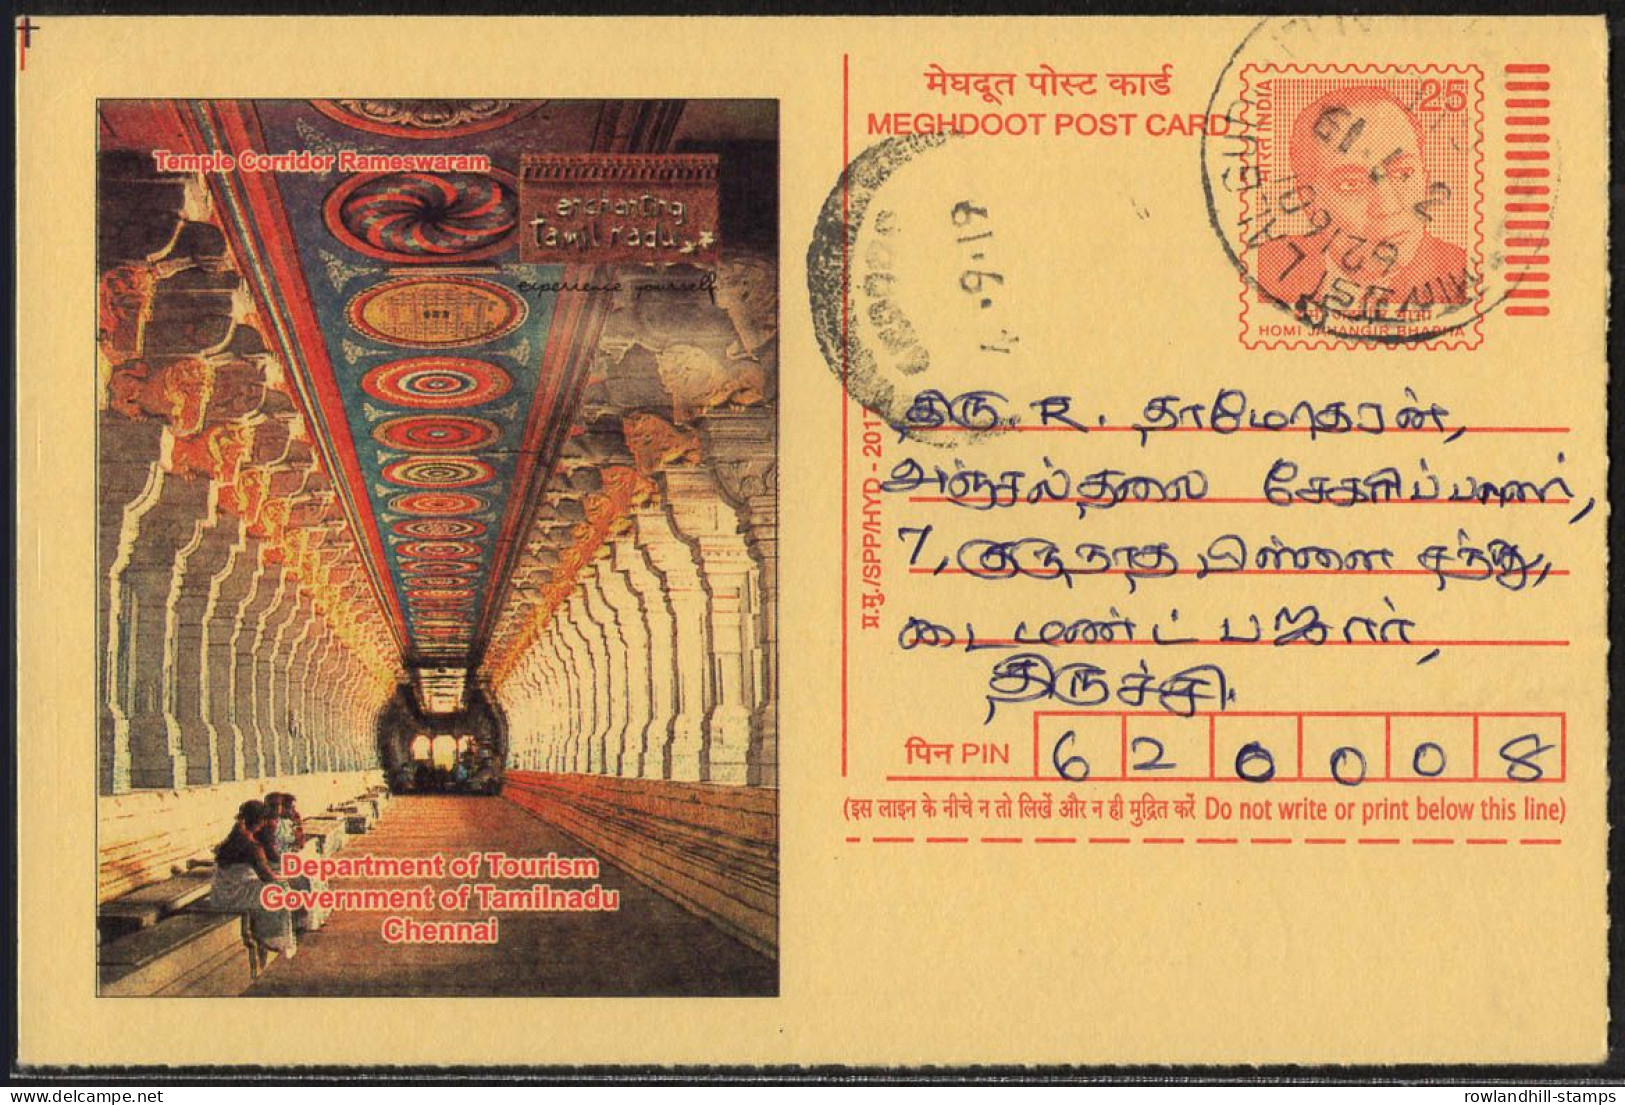 India, 2017, Temple Corridor RAMESWARAM, Meghdoot Post Card, Hinduism, Tourism, Tamilnadu, Architecture, Religion, A23 - Hinduismo